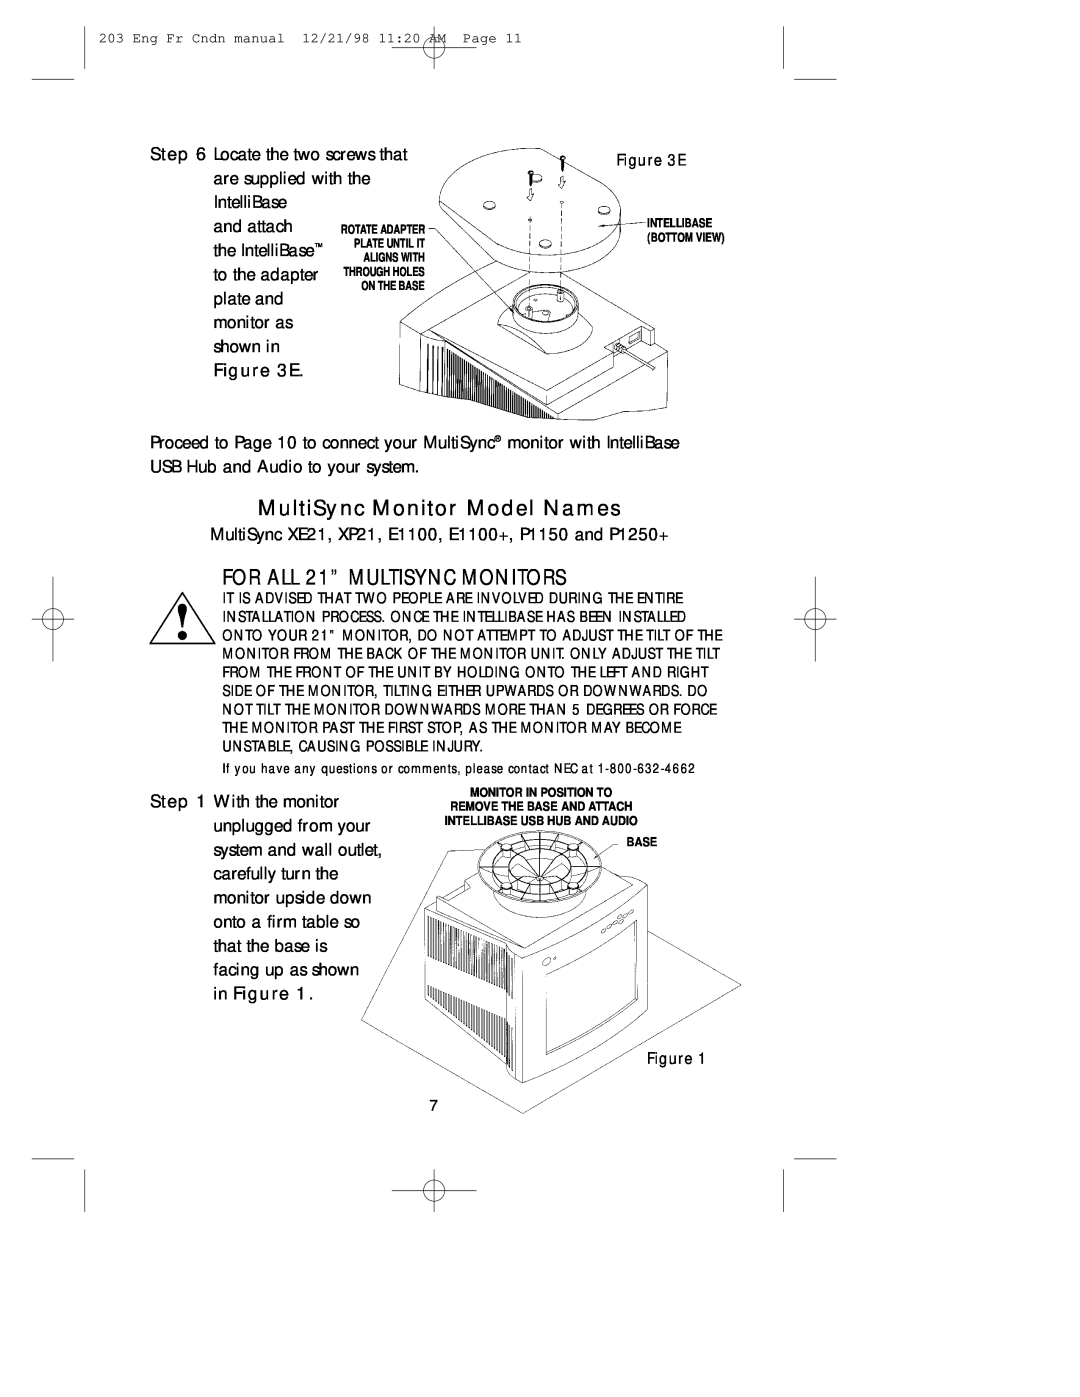 NEC USB user manual MultiSync Monitor Model Names, FOR ALL 21” MULTISYNC MONITORS, E, Figure 